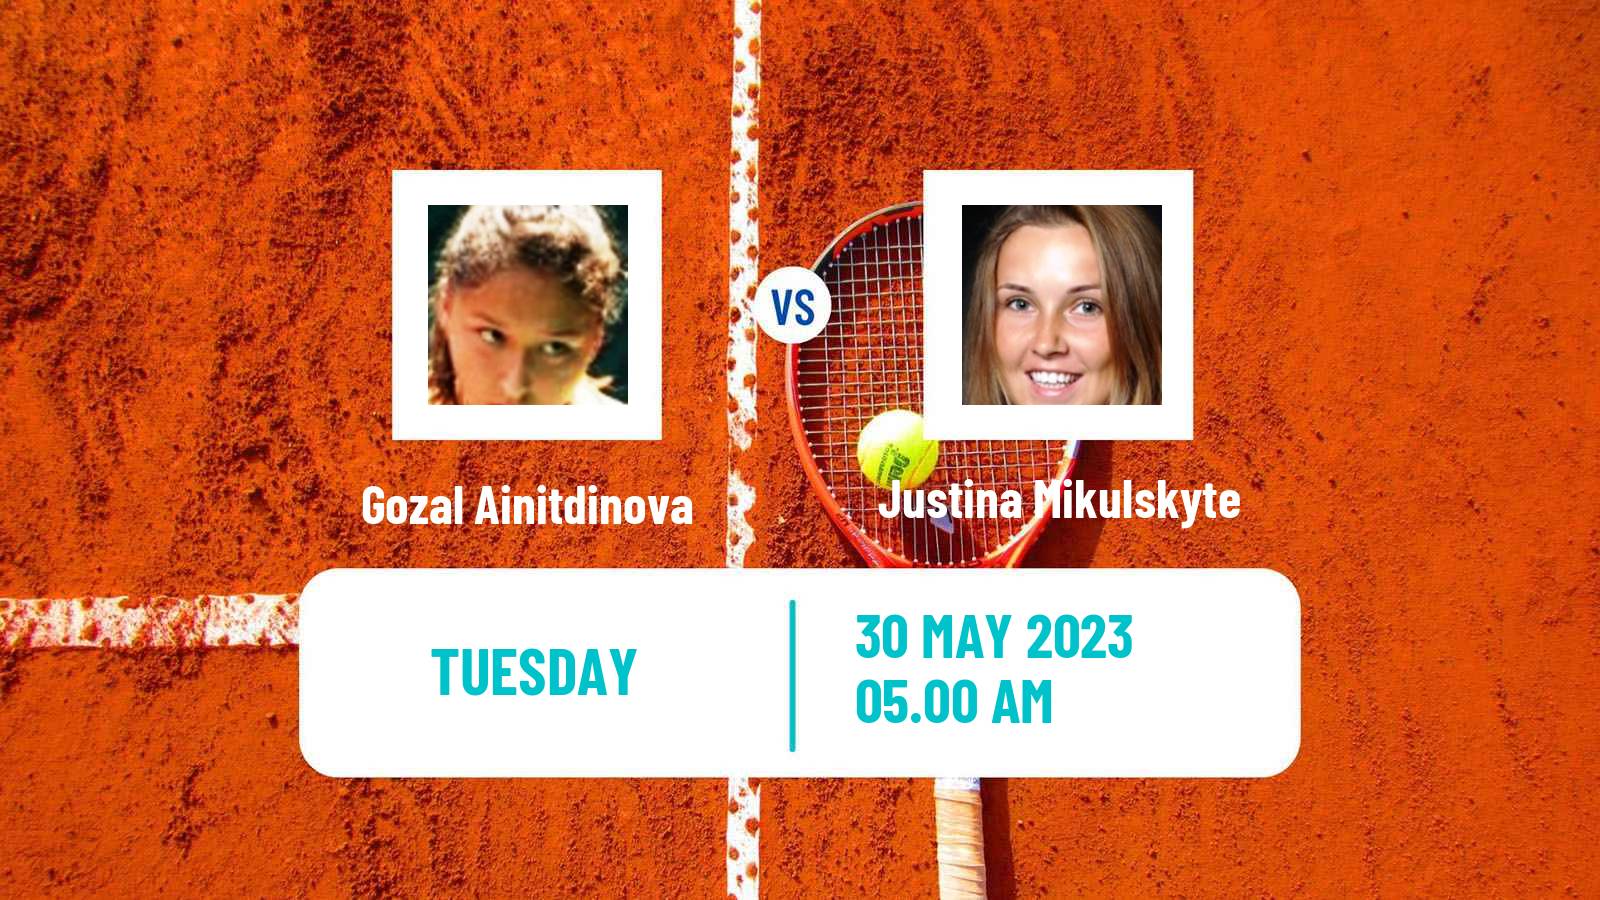 Tennis ITF W25 La Marsa Women Gozal Ainitdinova - Justina Mikulskyte